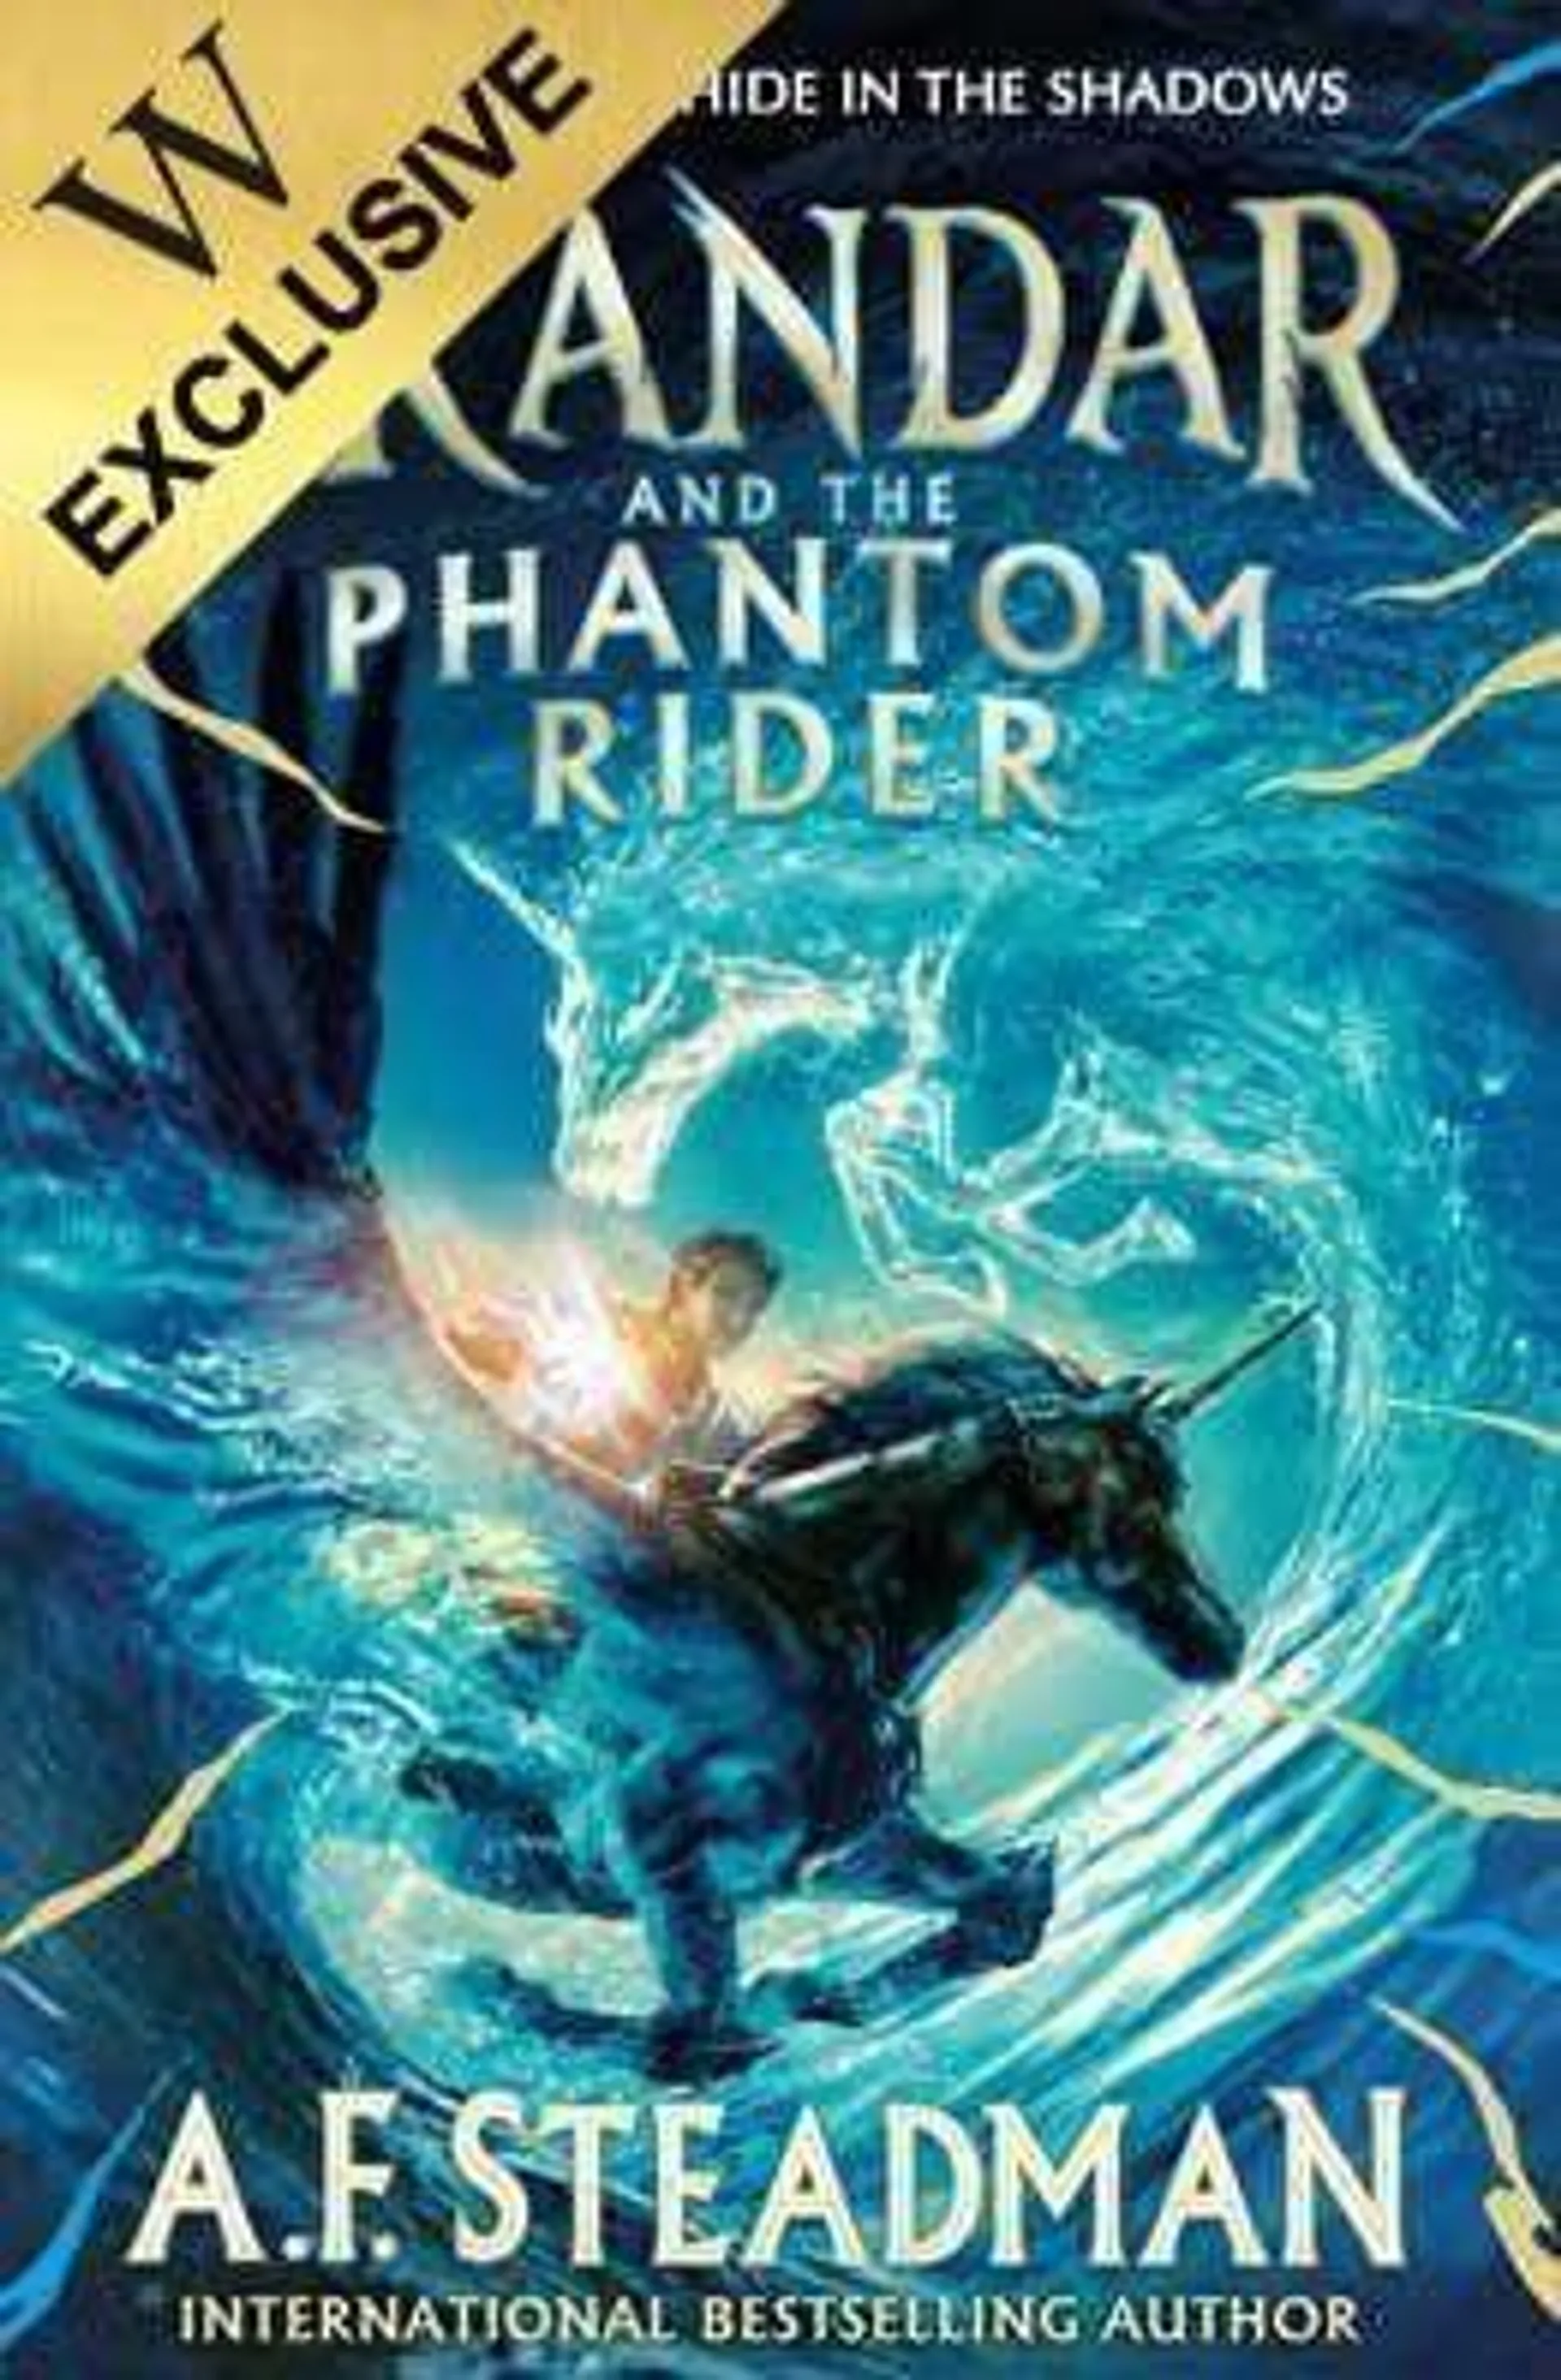 Skandar and the Phantom Rider: Exclusive Edition (Hardback)